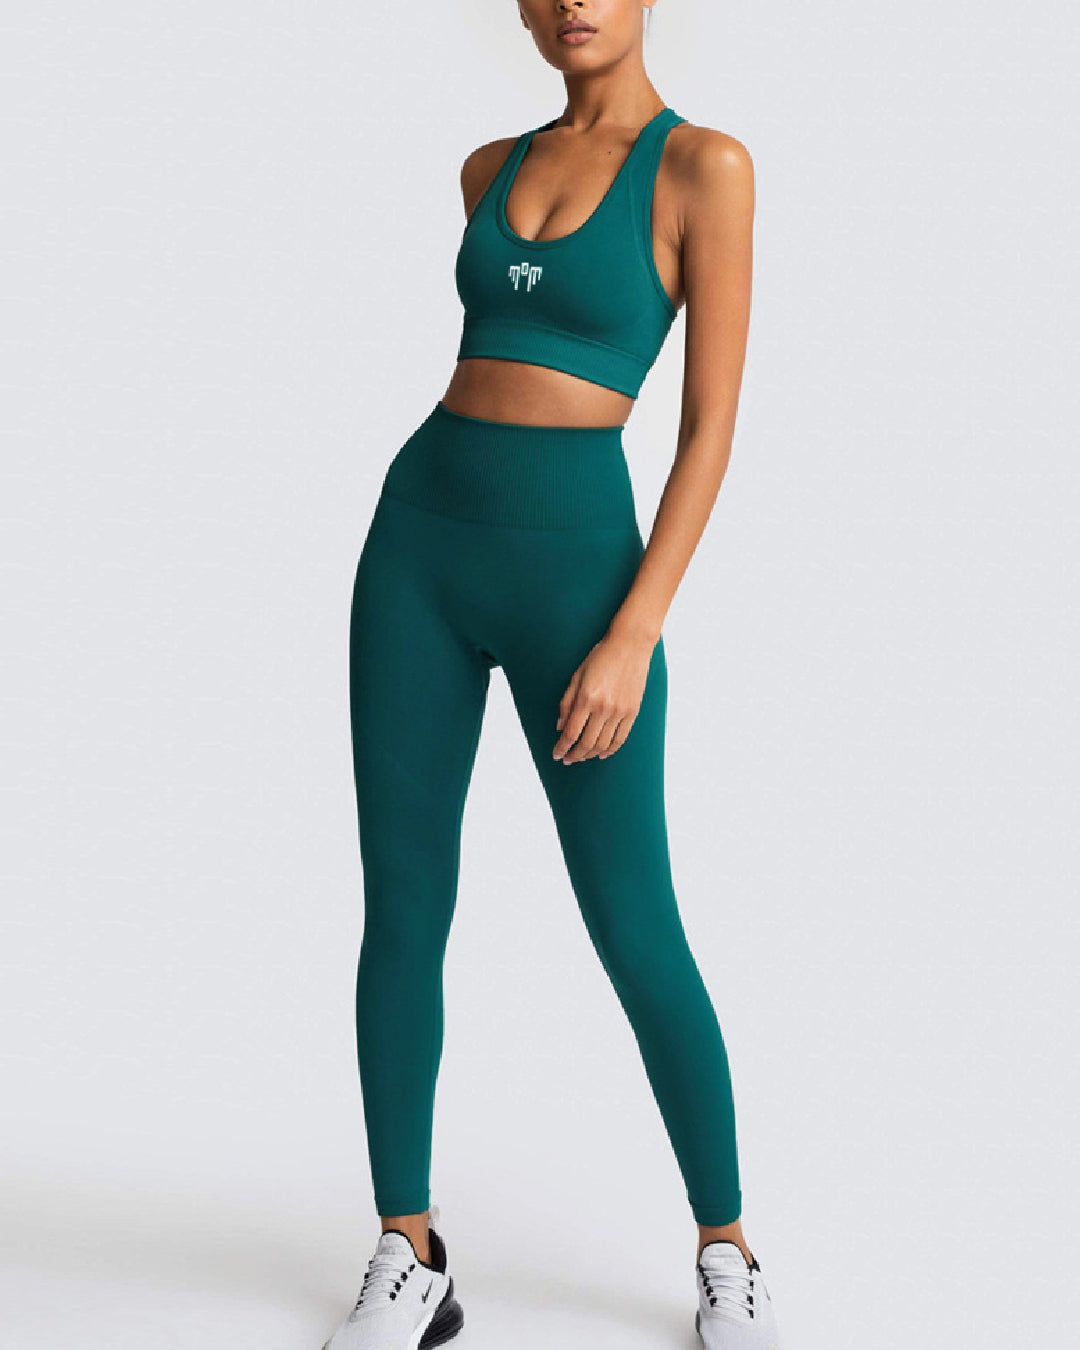 Morgan Tights - Green - L  Outfits with leggings, Skin tight leggings, Girls  in leggings